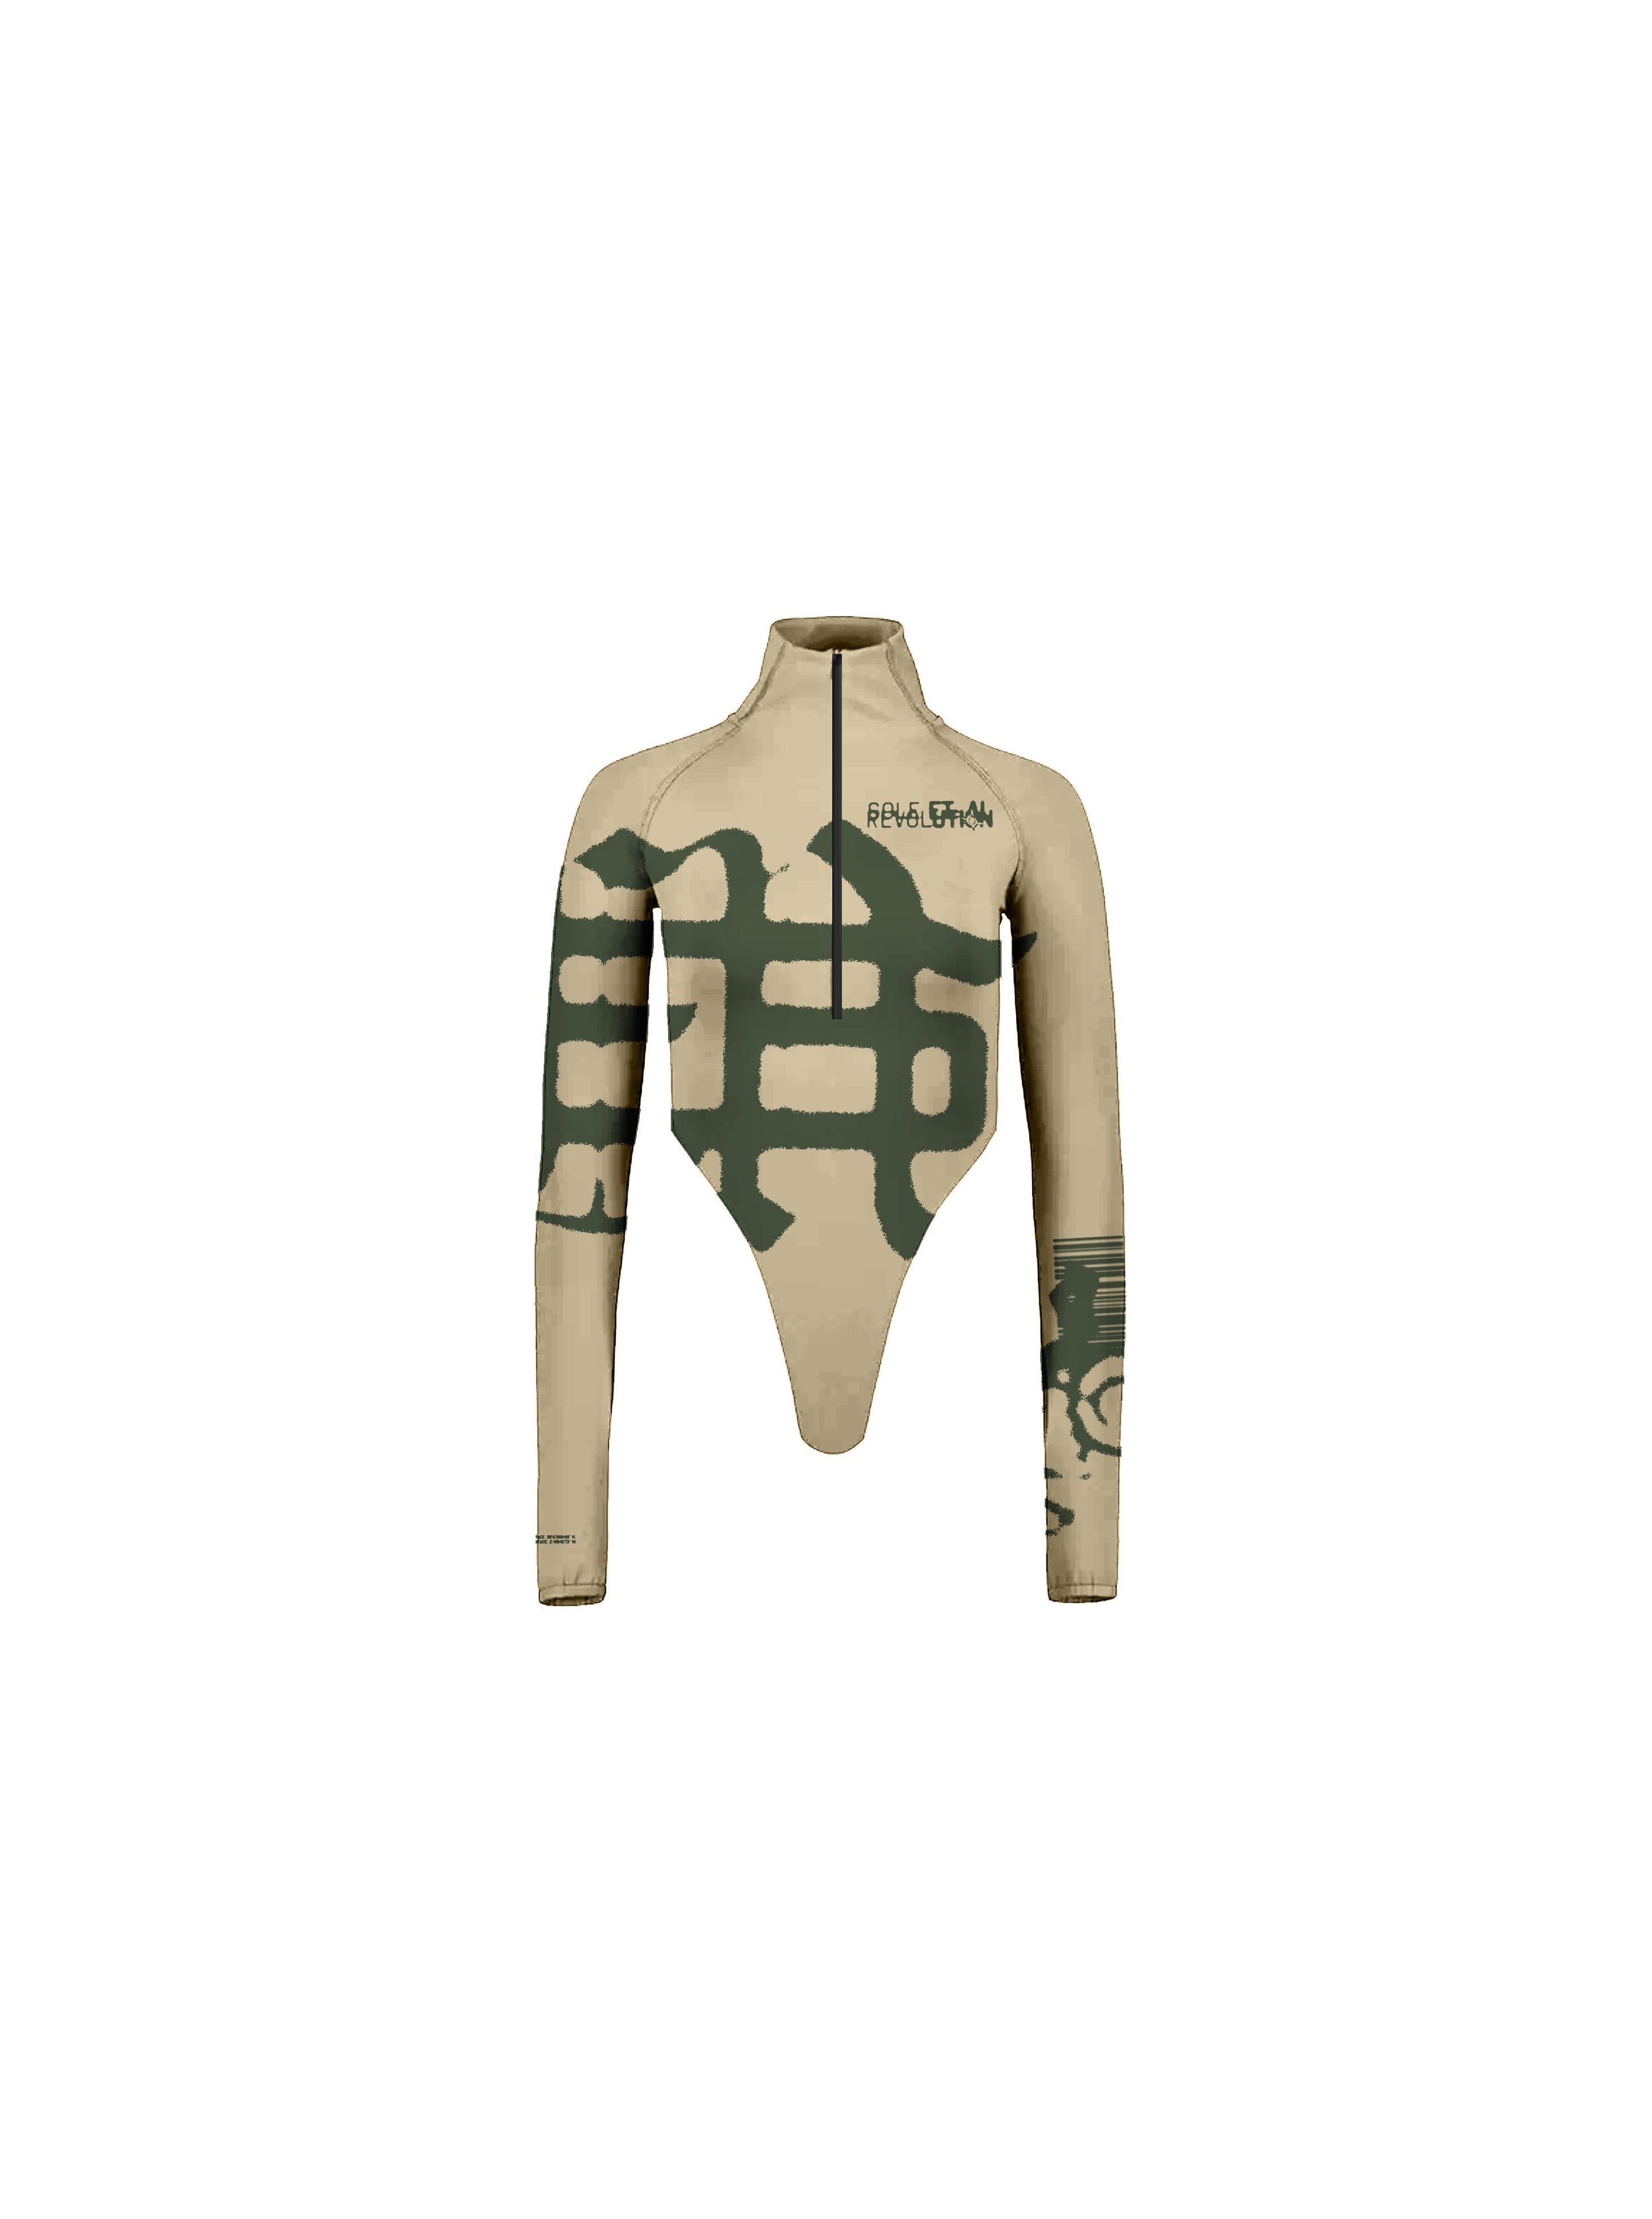 Sole et. Al Revølutiøn Zip Bodysuit : Sand/militærgrønn